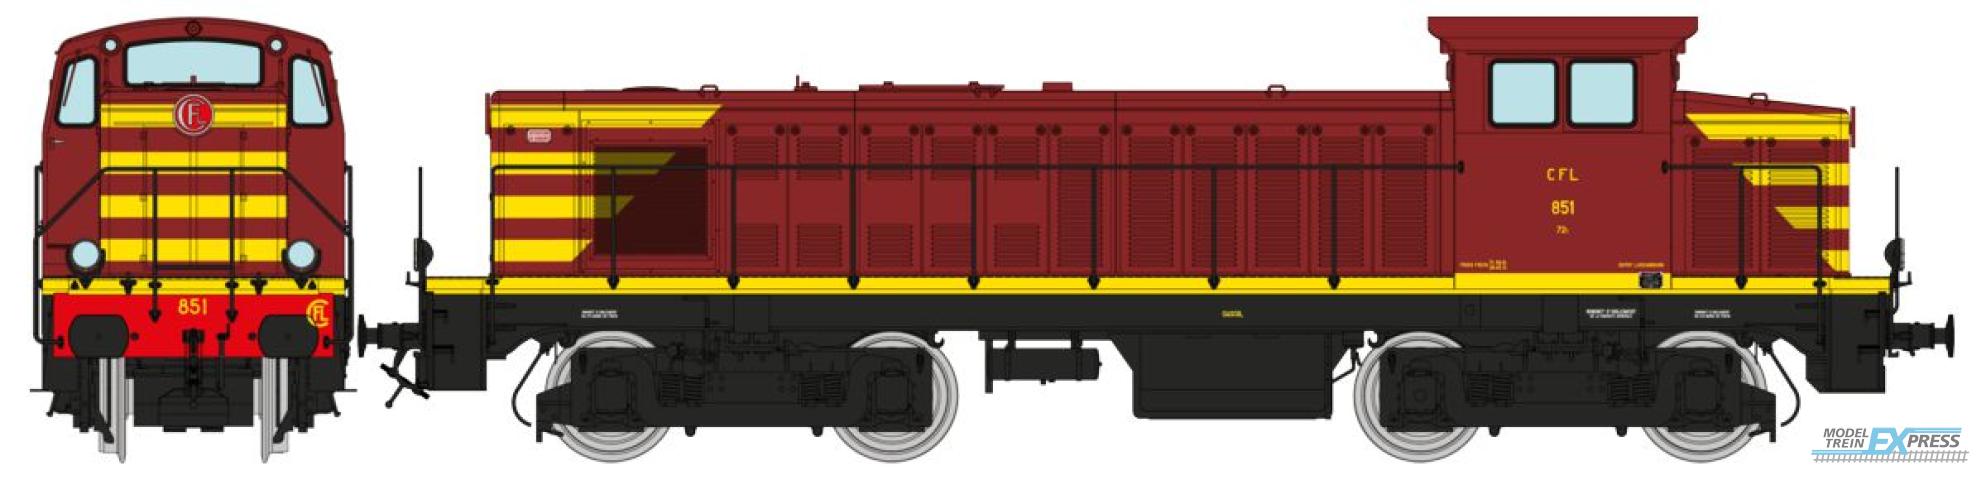 REE models JM-011SAC Diesel Locomotive 851, Origin Livery, CFL Era III - AC SOUND 3 Rails AC